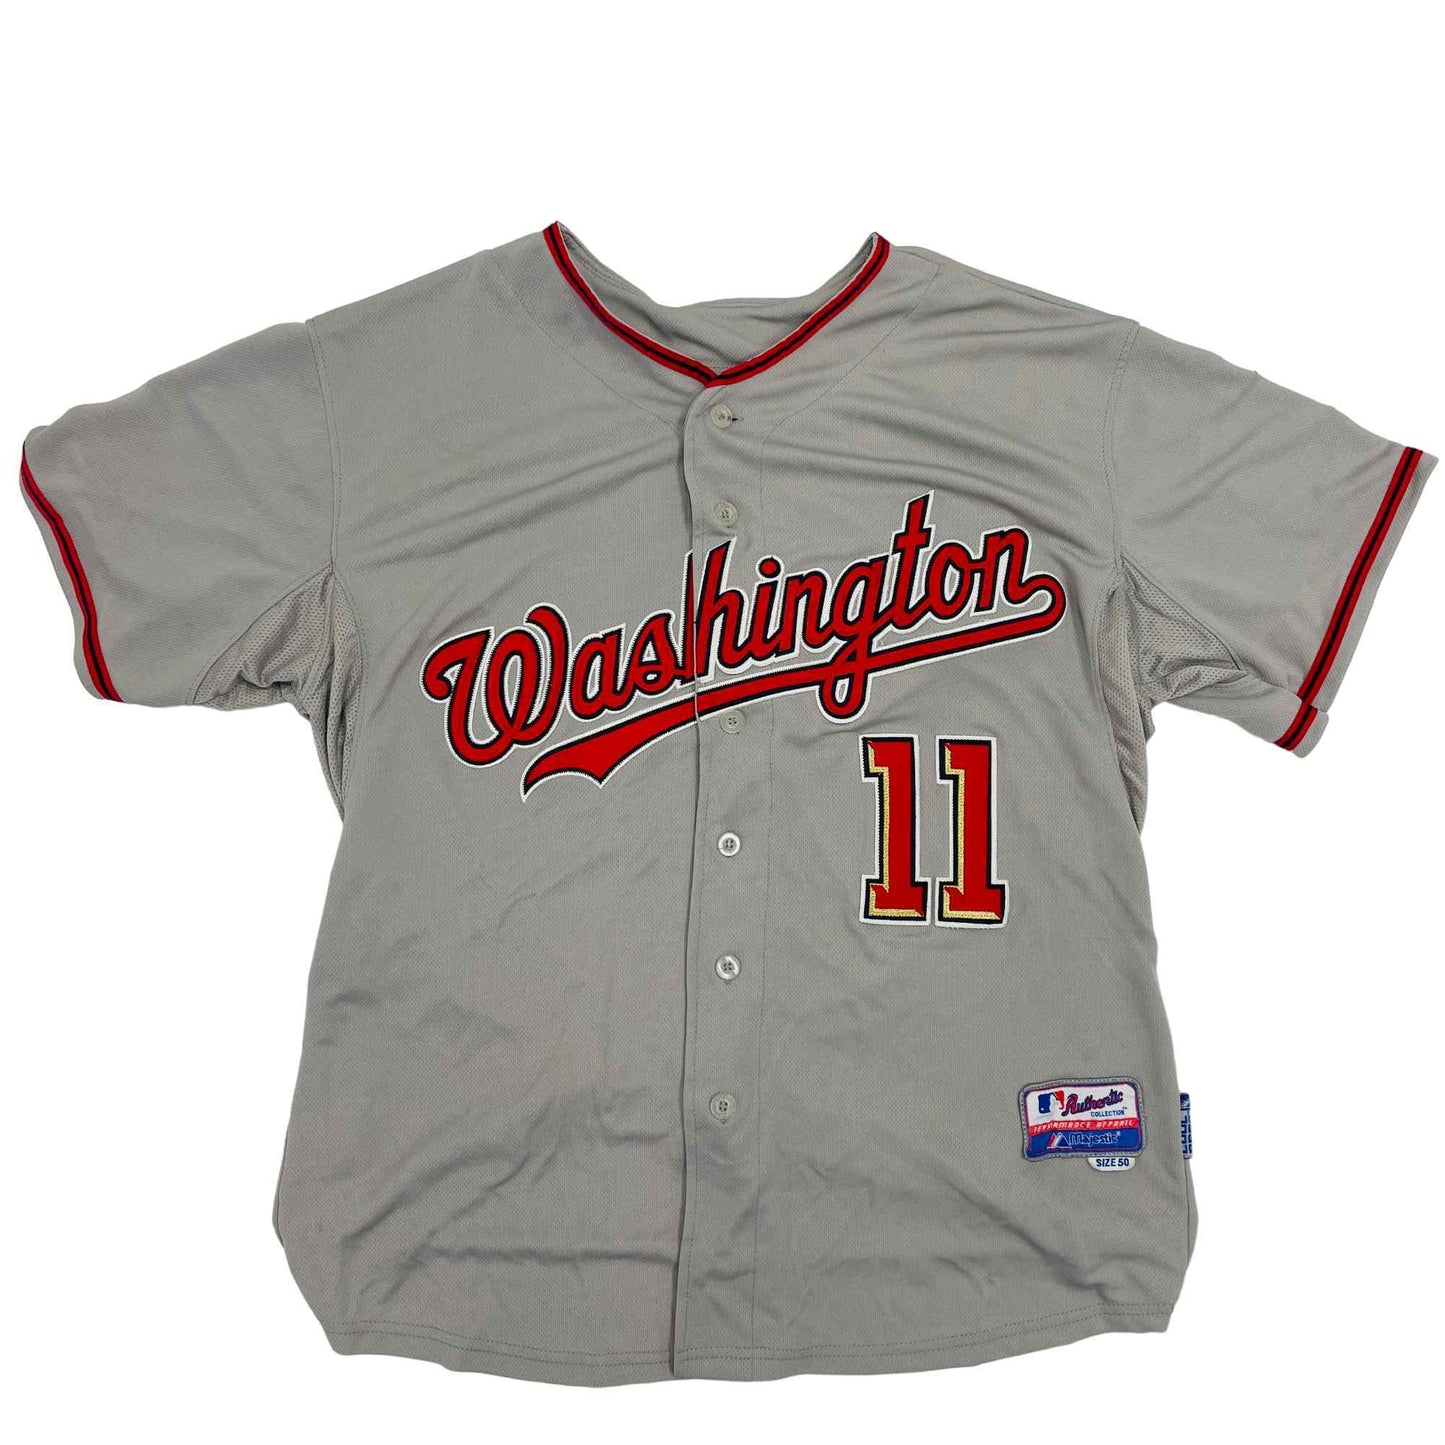 MLB. Washington Nationals DC Majestic Jersey. Size Large. Good Condition